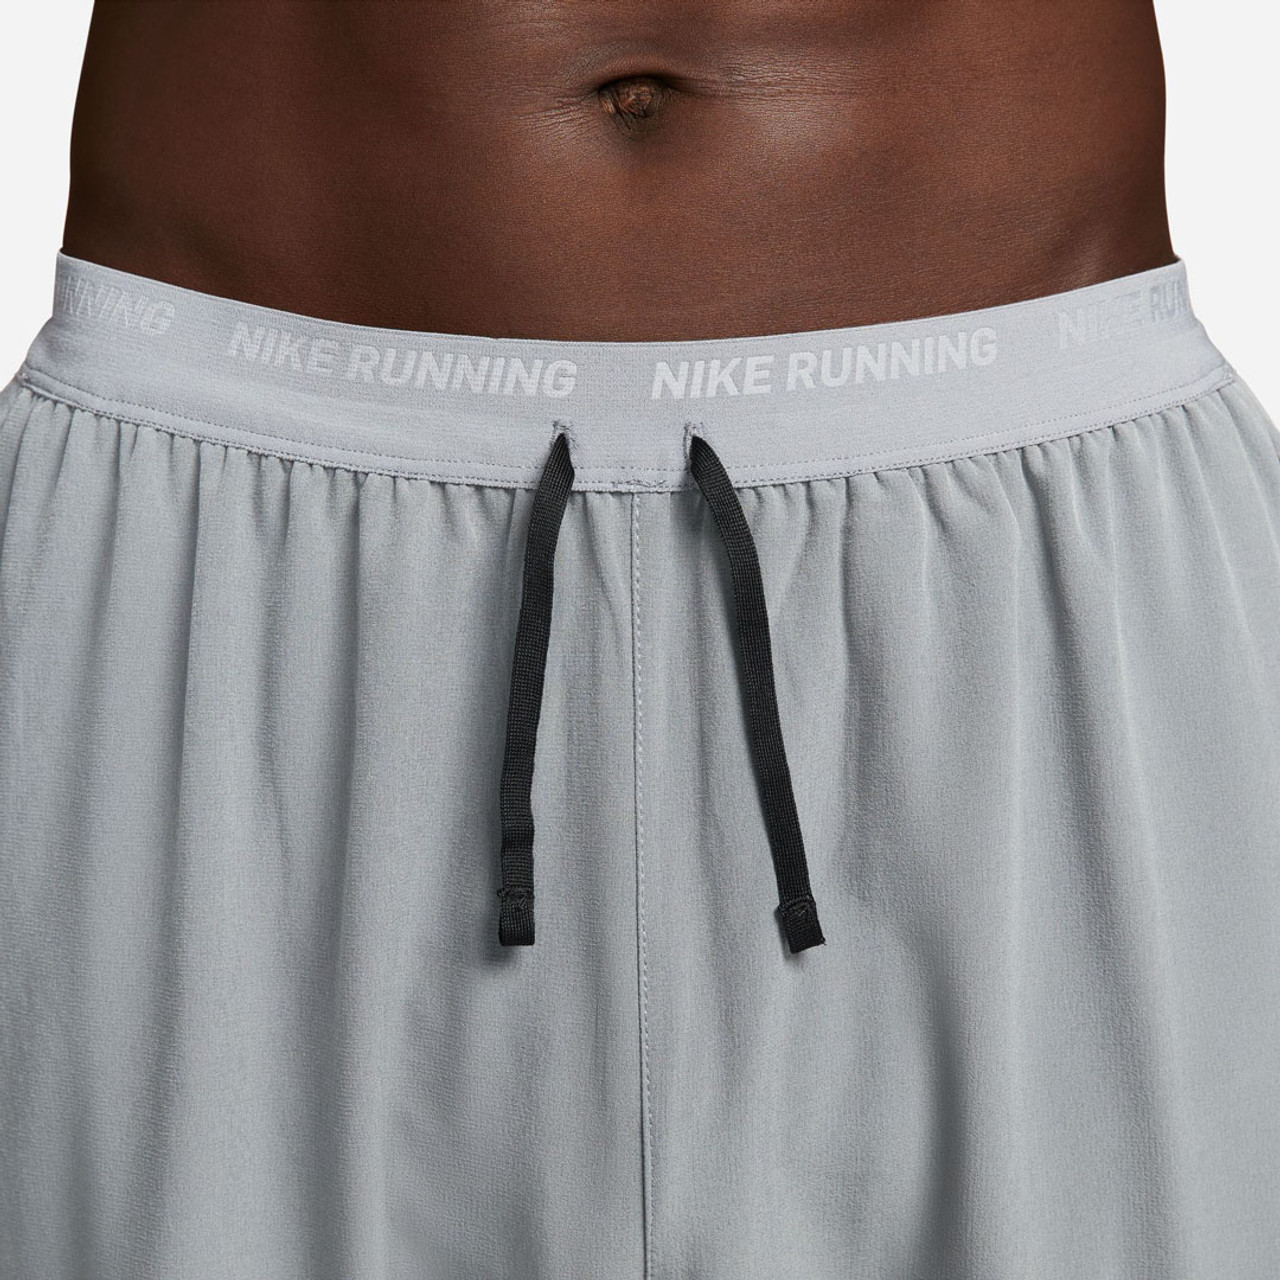 Nike Men's Dri-FIT Phenom Elite Woven Running Pants $ 95